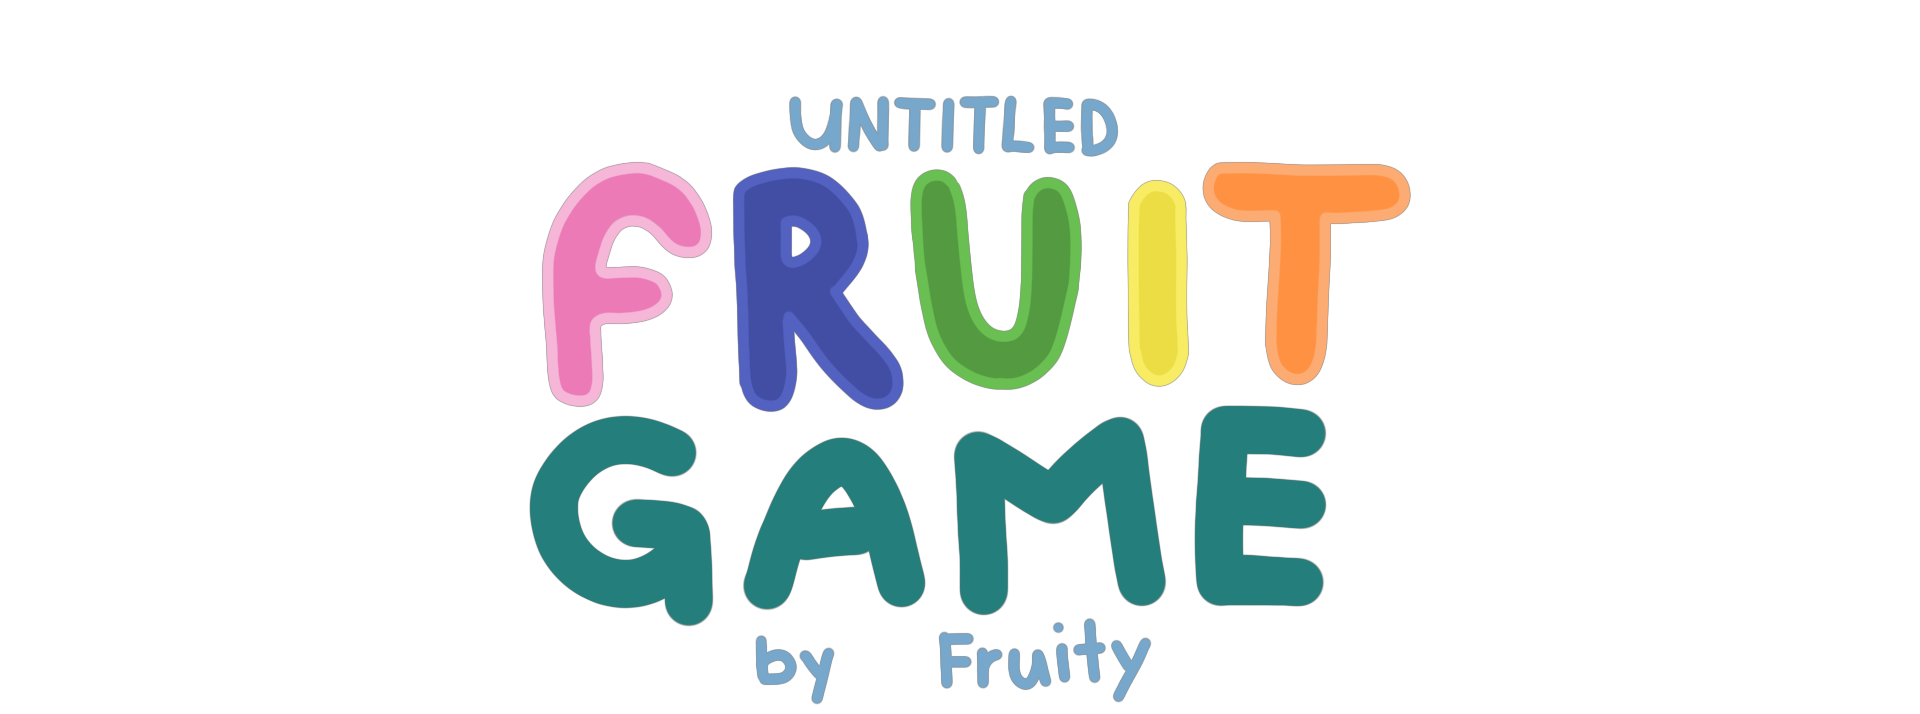 Untitled Fruit Game